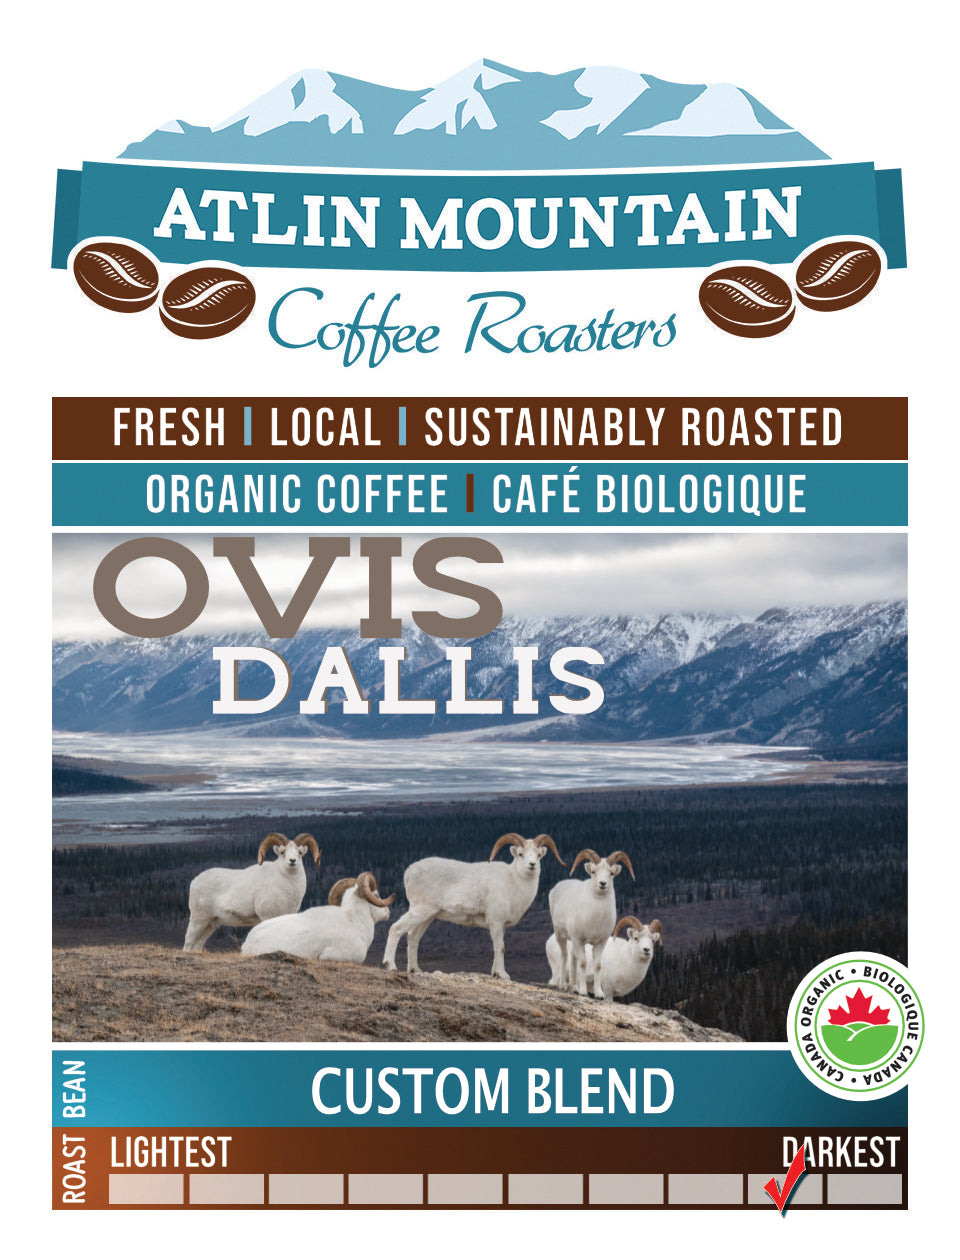 Ovis Dallis - Organic coffee - Dall sheep blend - Fundraiser for BC Wild sheep society